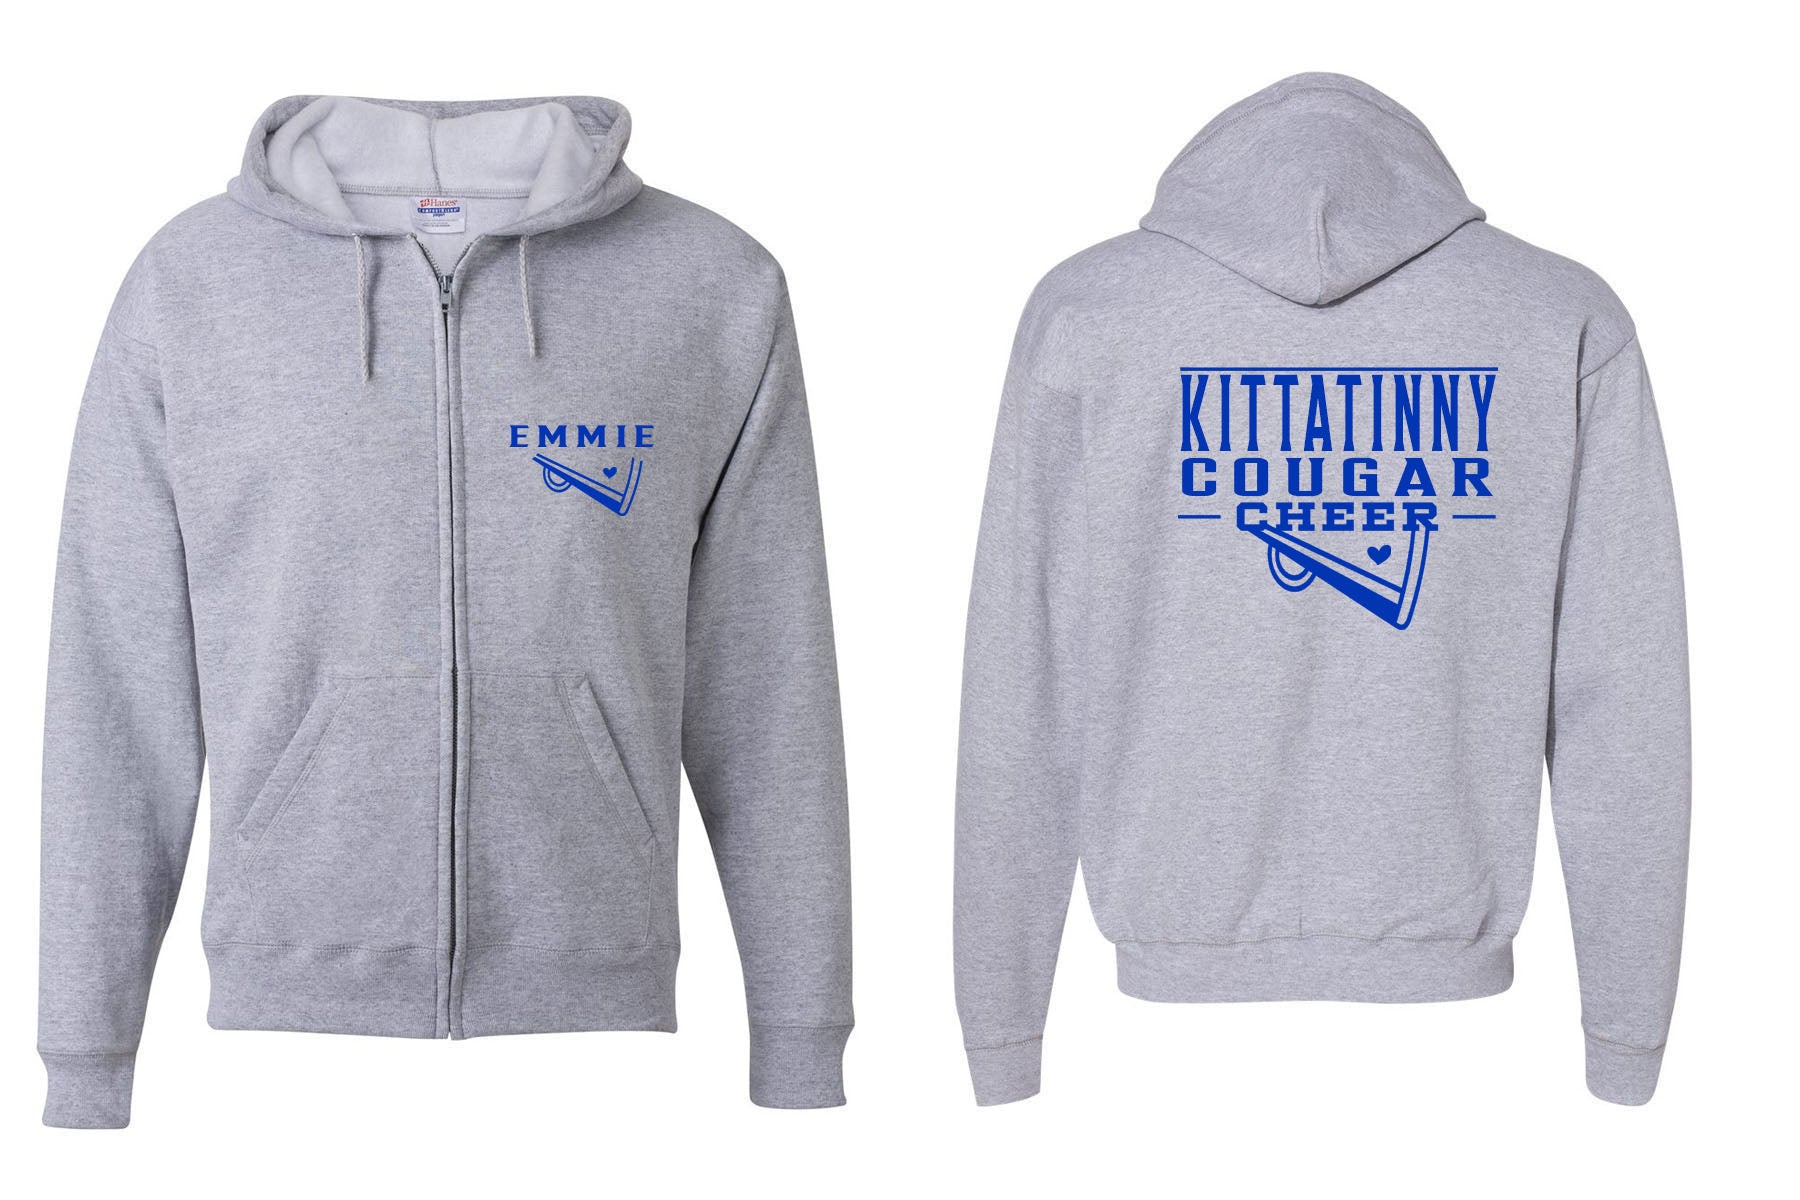 Kittatinny Cheer design 11 Zip up Sweatshirt